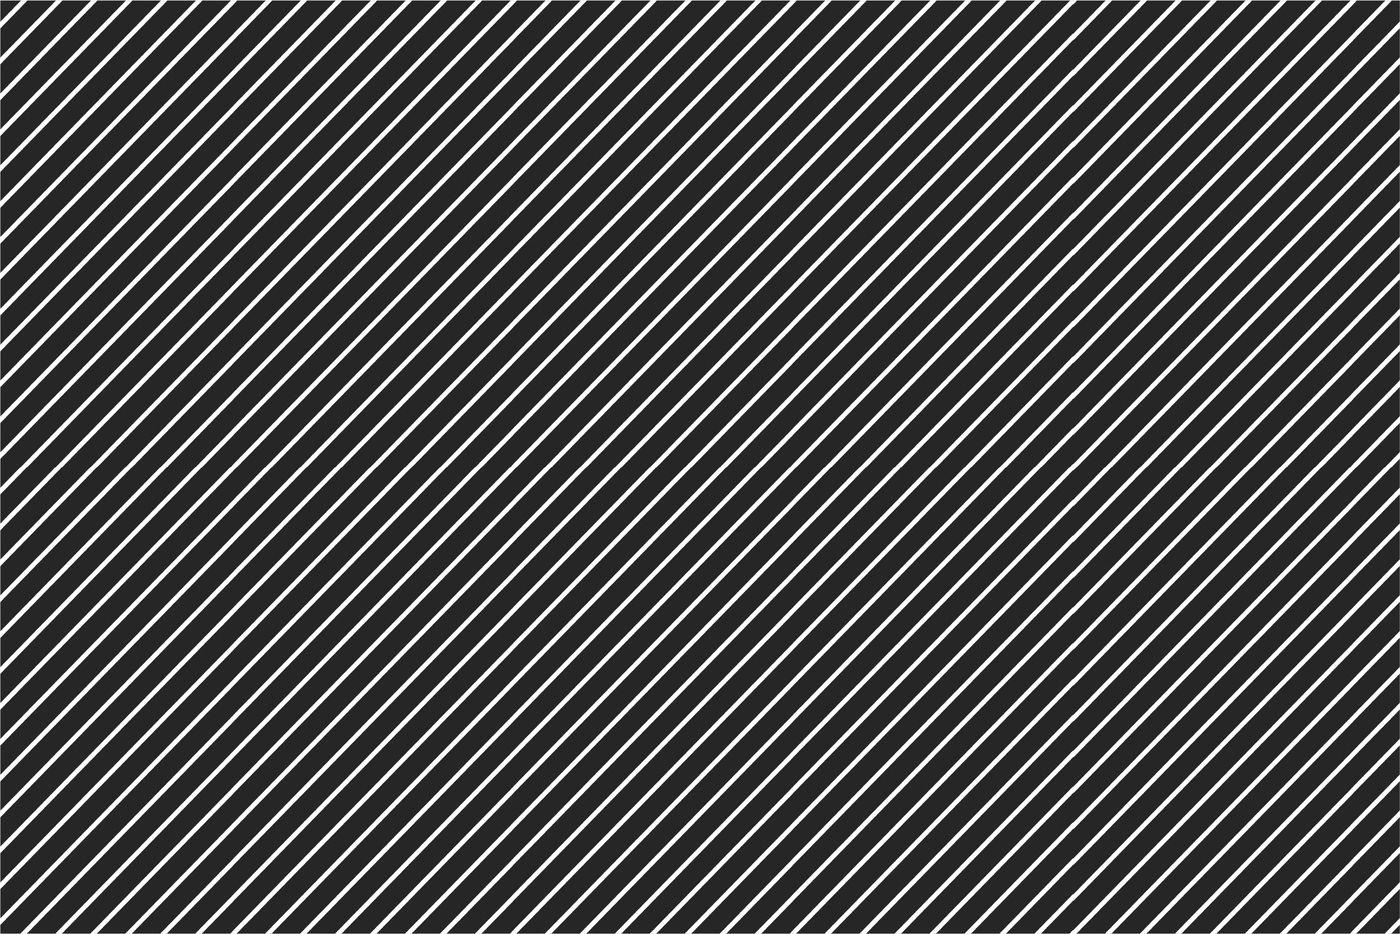 Minimal seamless geometric patterns By ExpressShop | TheHungryJPEG